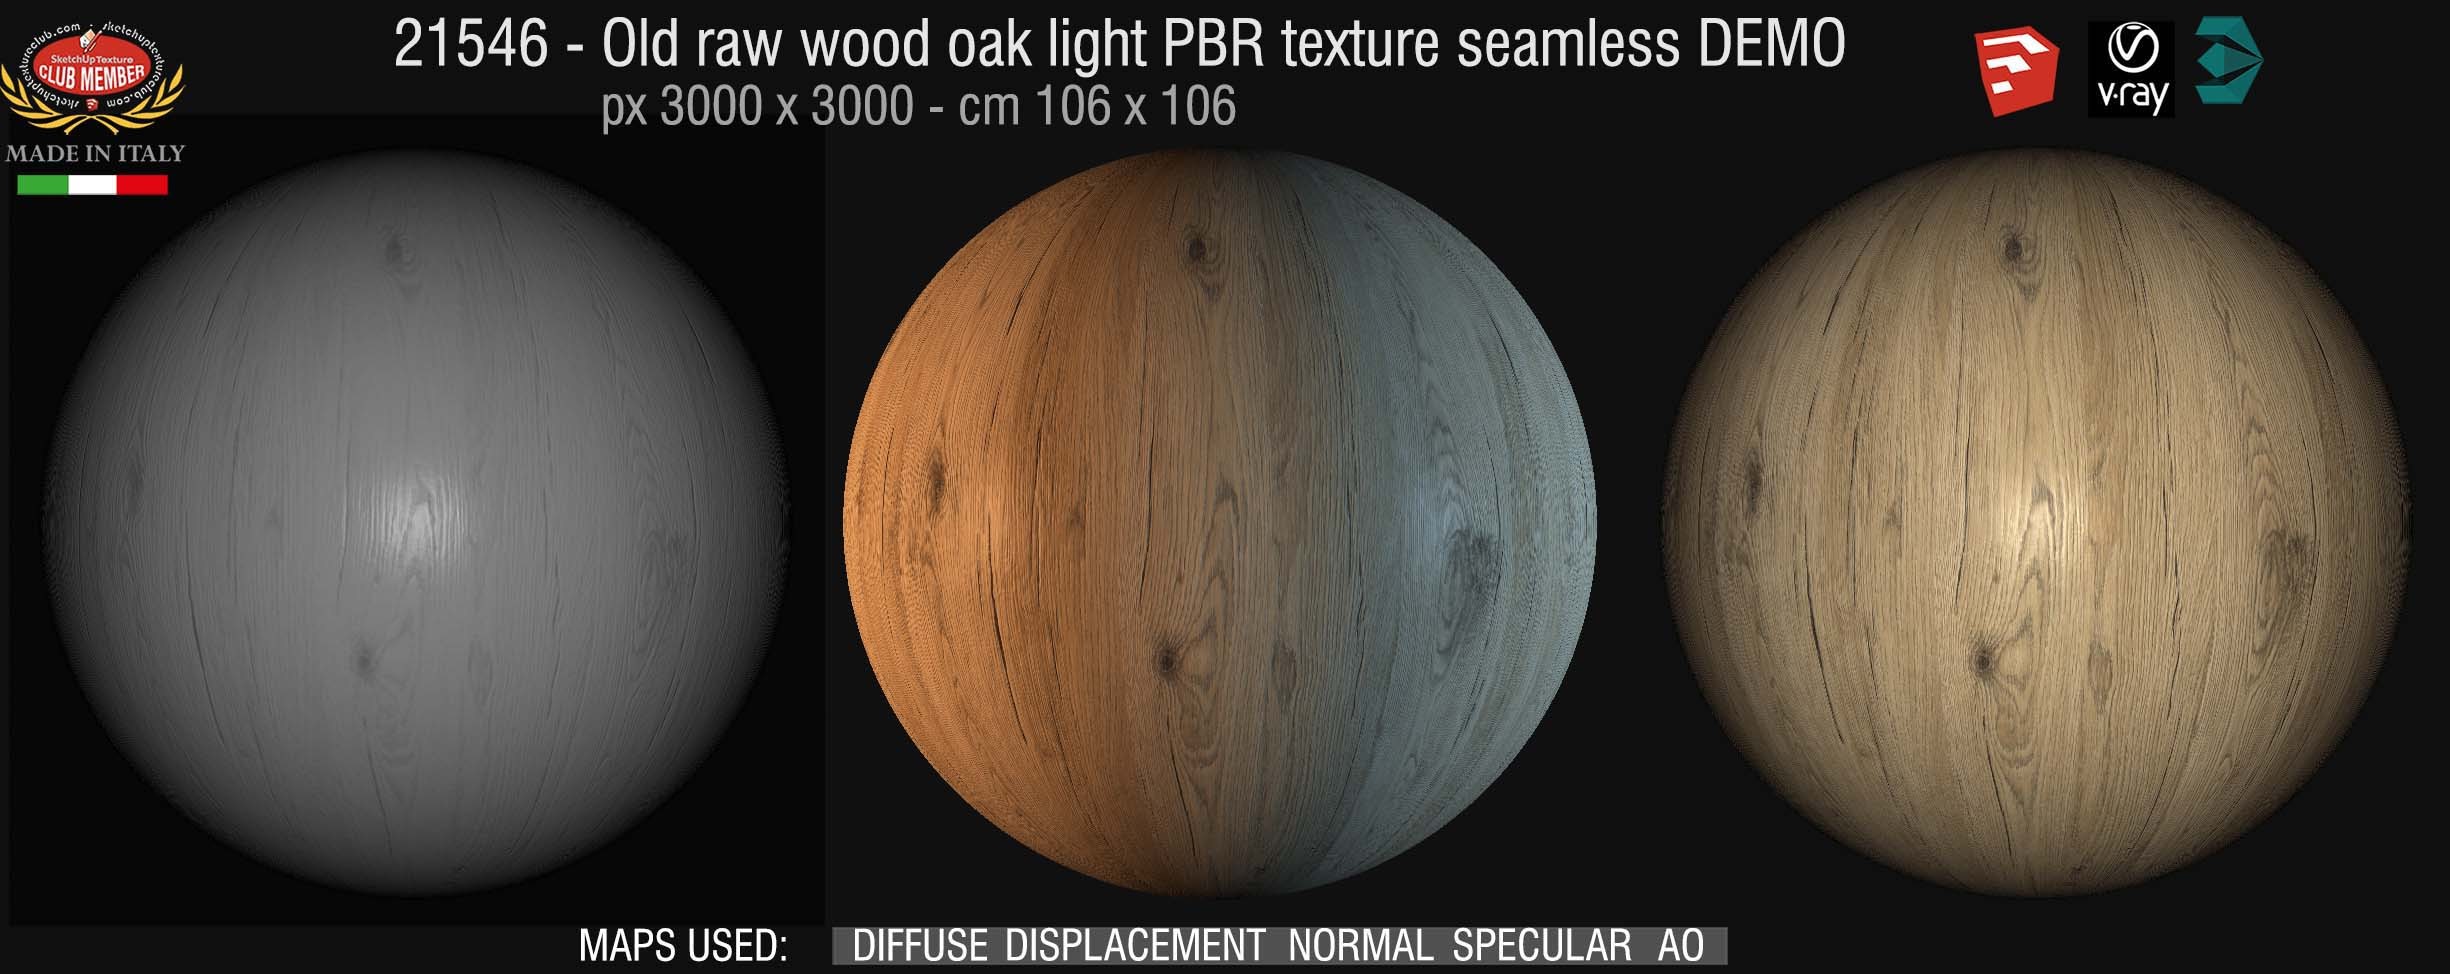 21546 Raw wood oak light PBR texture seamless DEMO